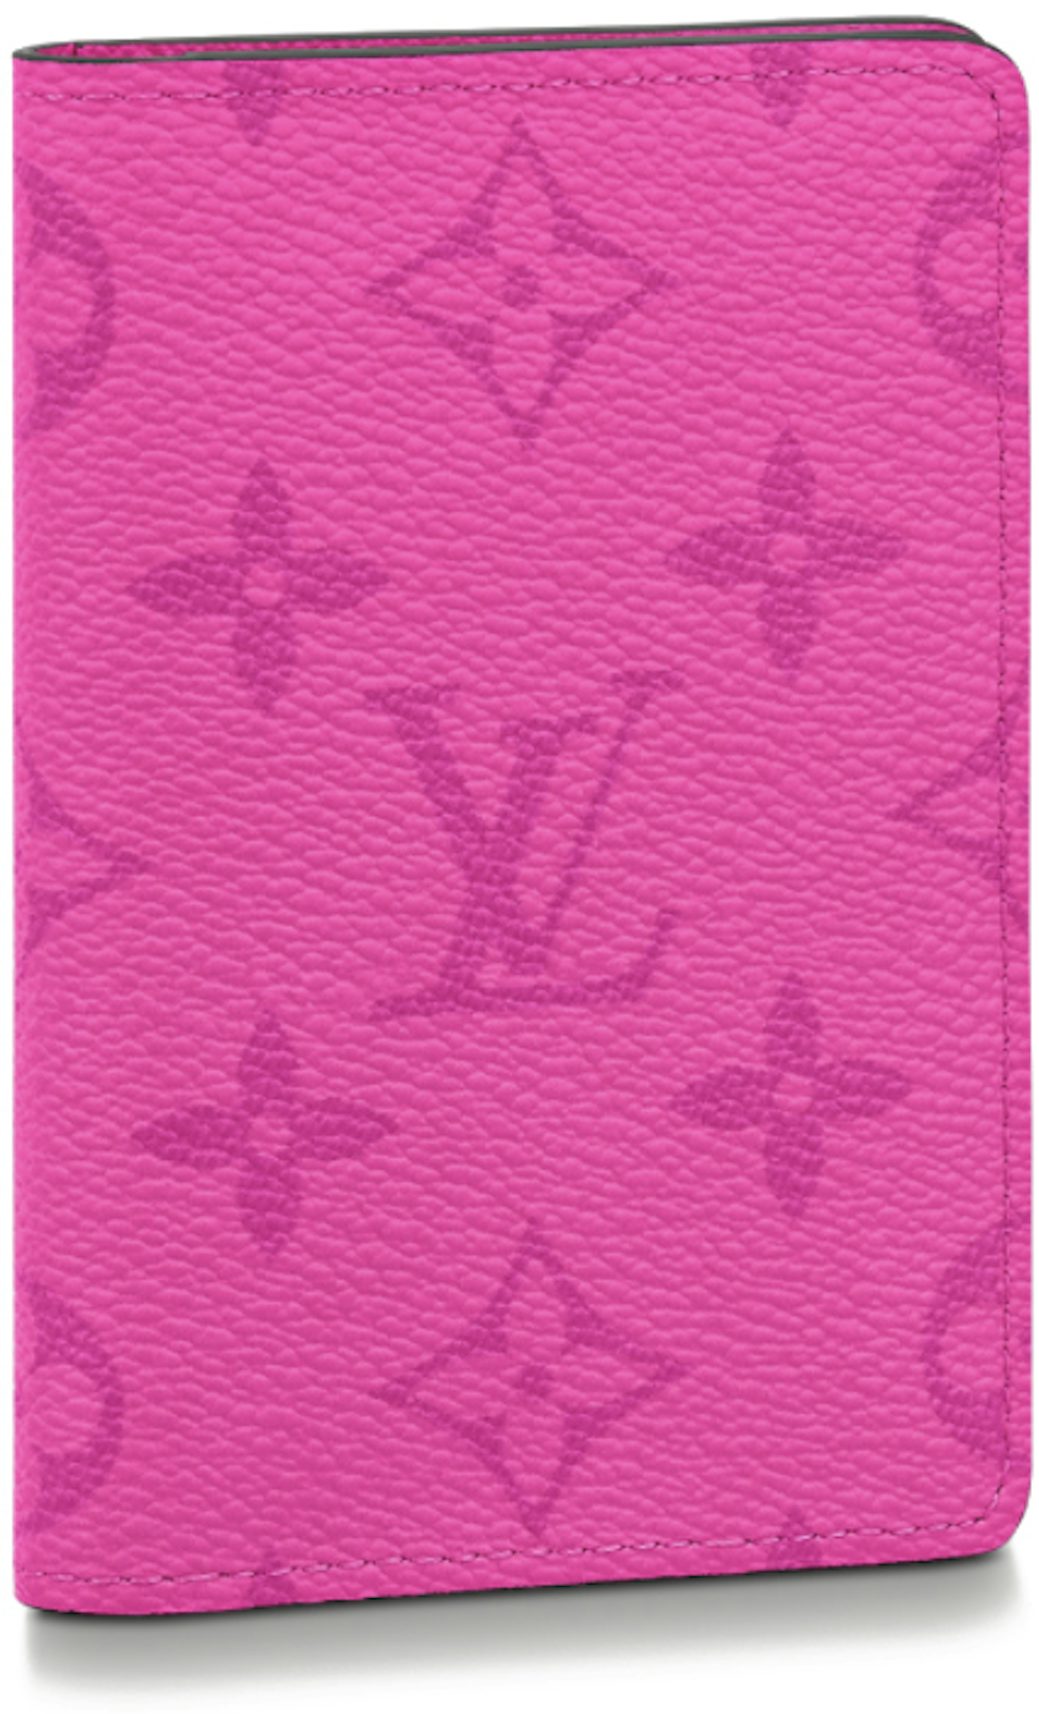 Buy Louis Vuitton Wallet Accessories - Color Pink - StockX